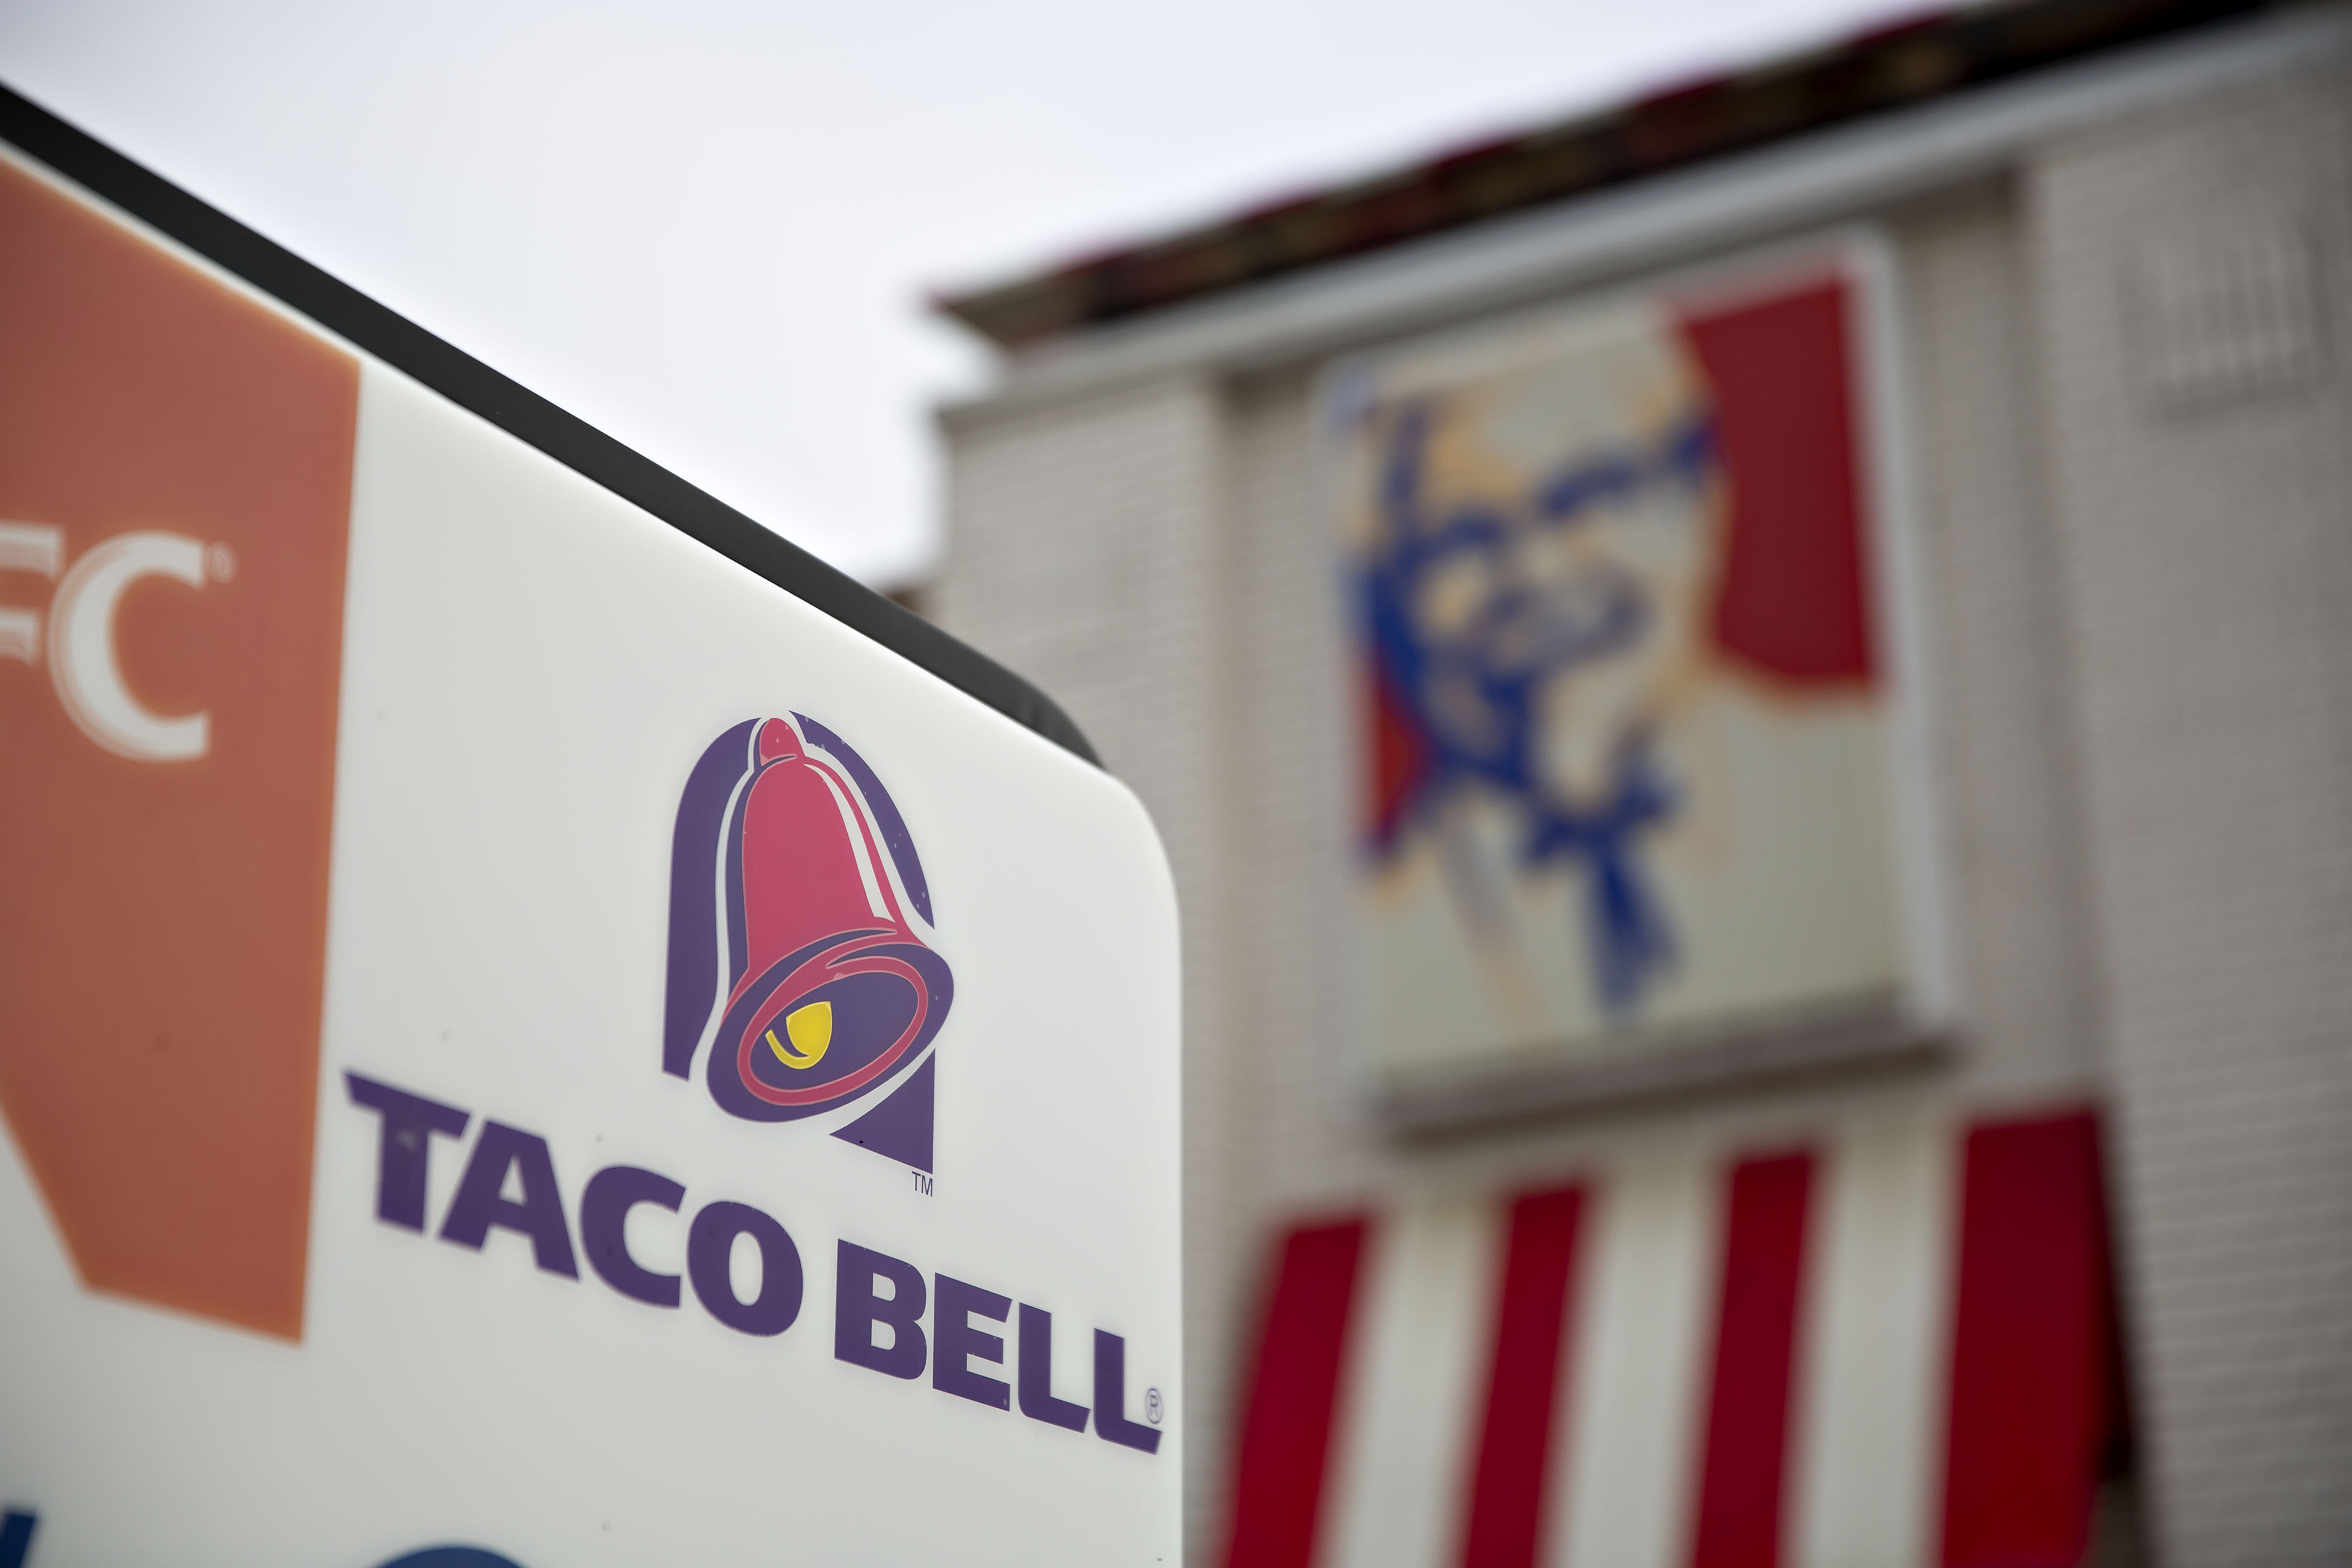 Taco Bell owner Yum Brands buys Tictuk social media ordering platform